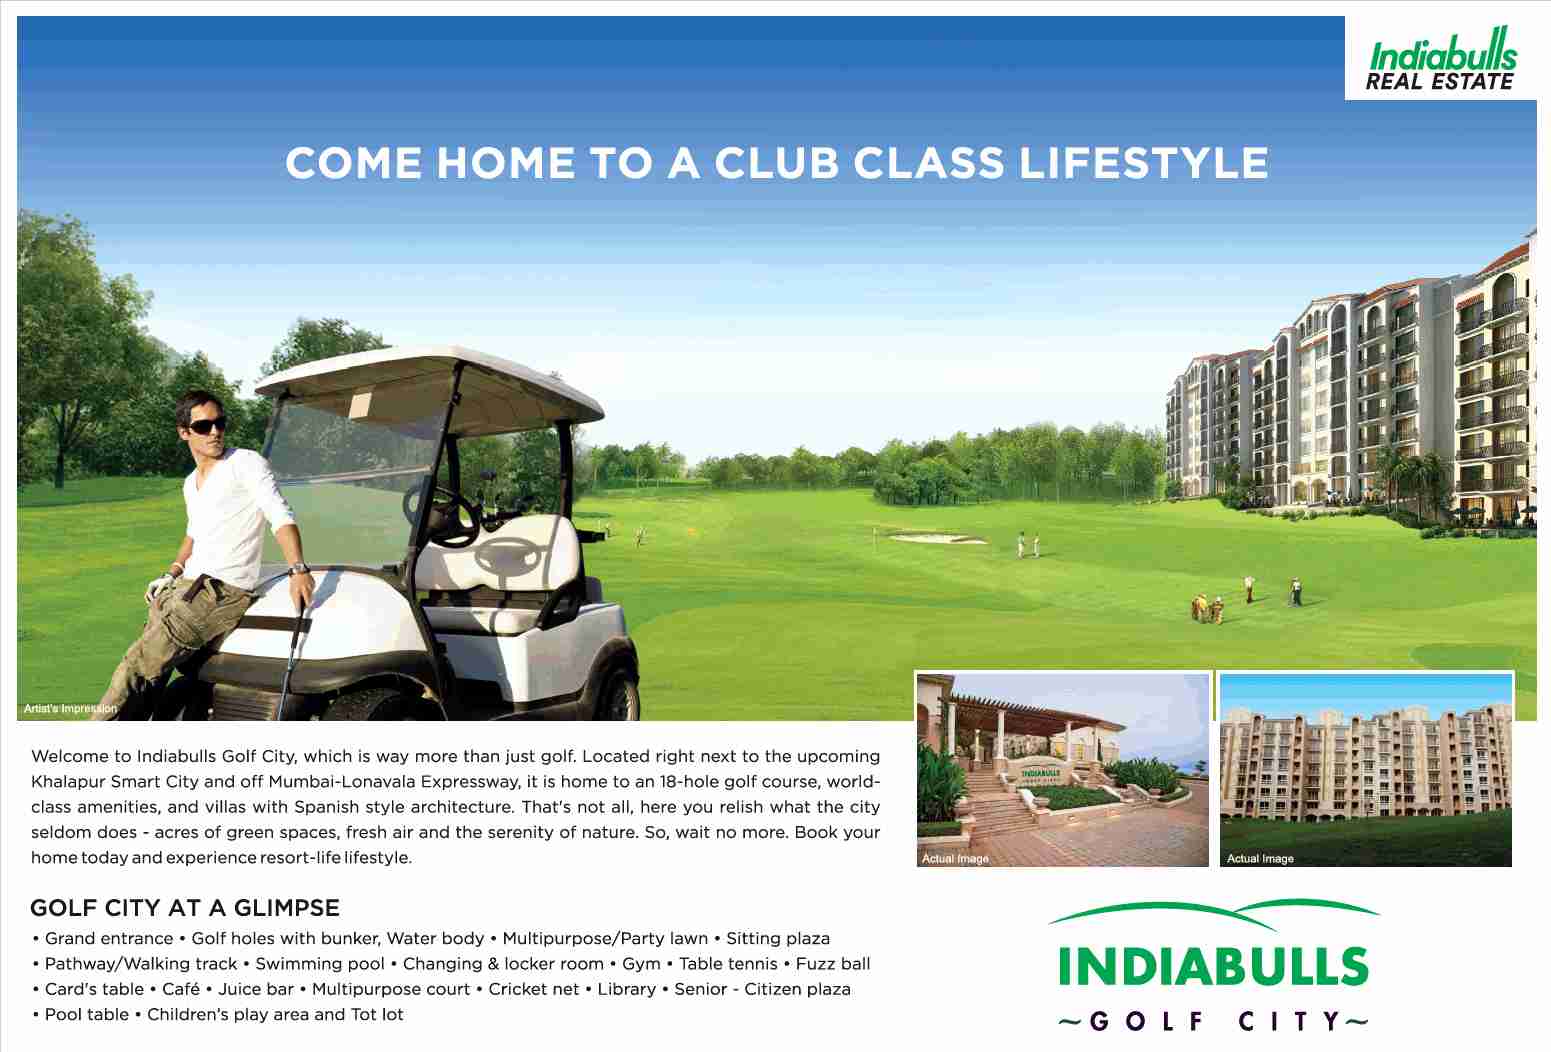 Experience a club class lifestyle by residing at Indiabulls Golf City in Navi Mumbai